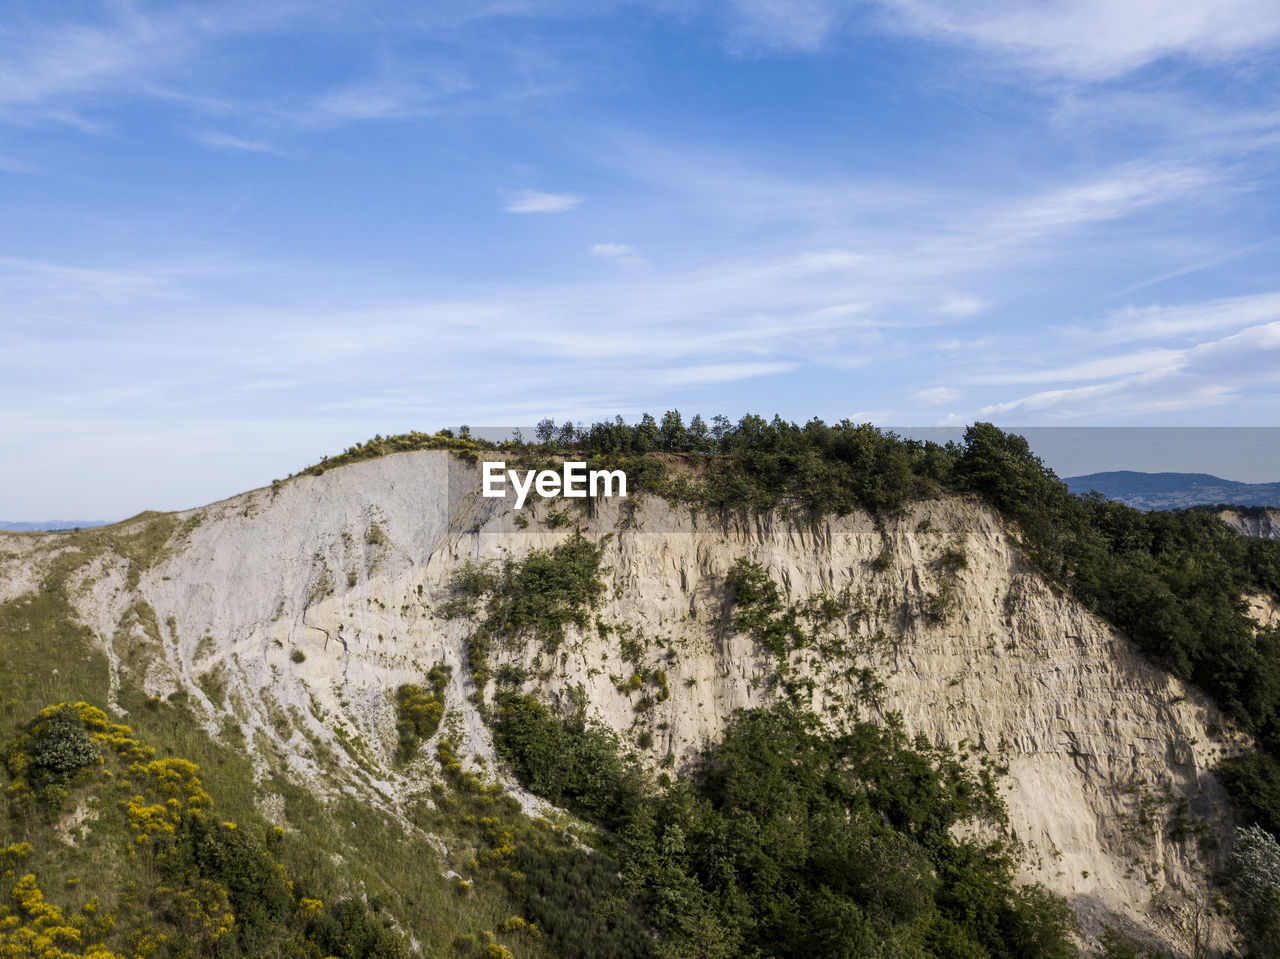 Scenic view of mountains against sky - calanchi tipici delle colline emiliano rimagnole